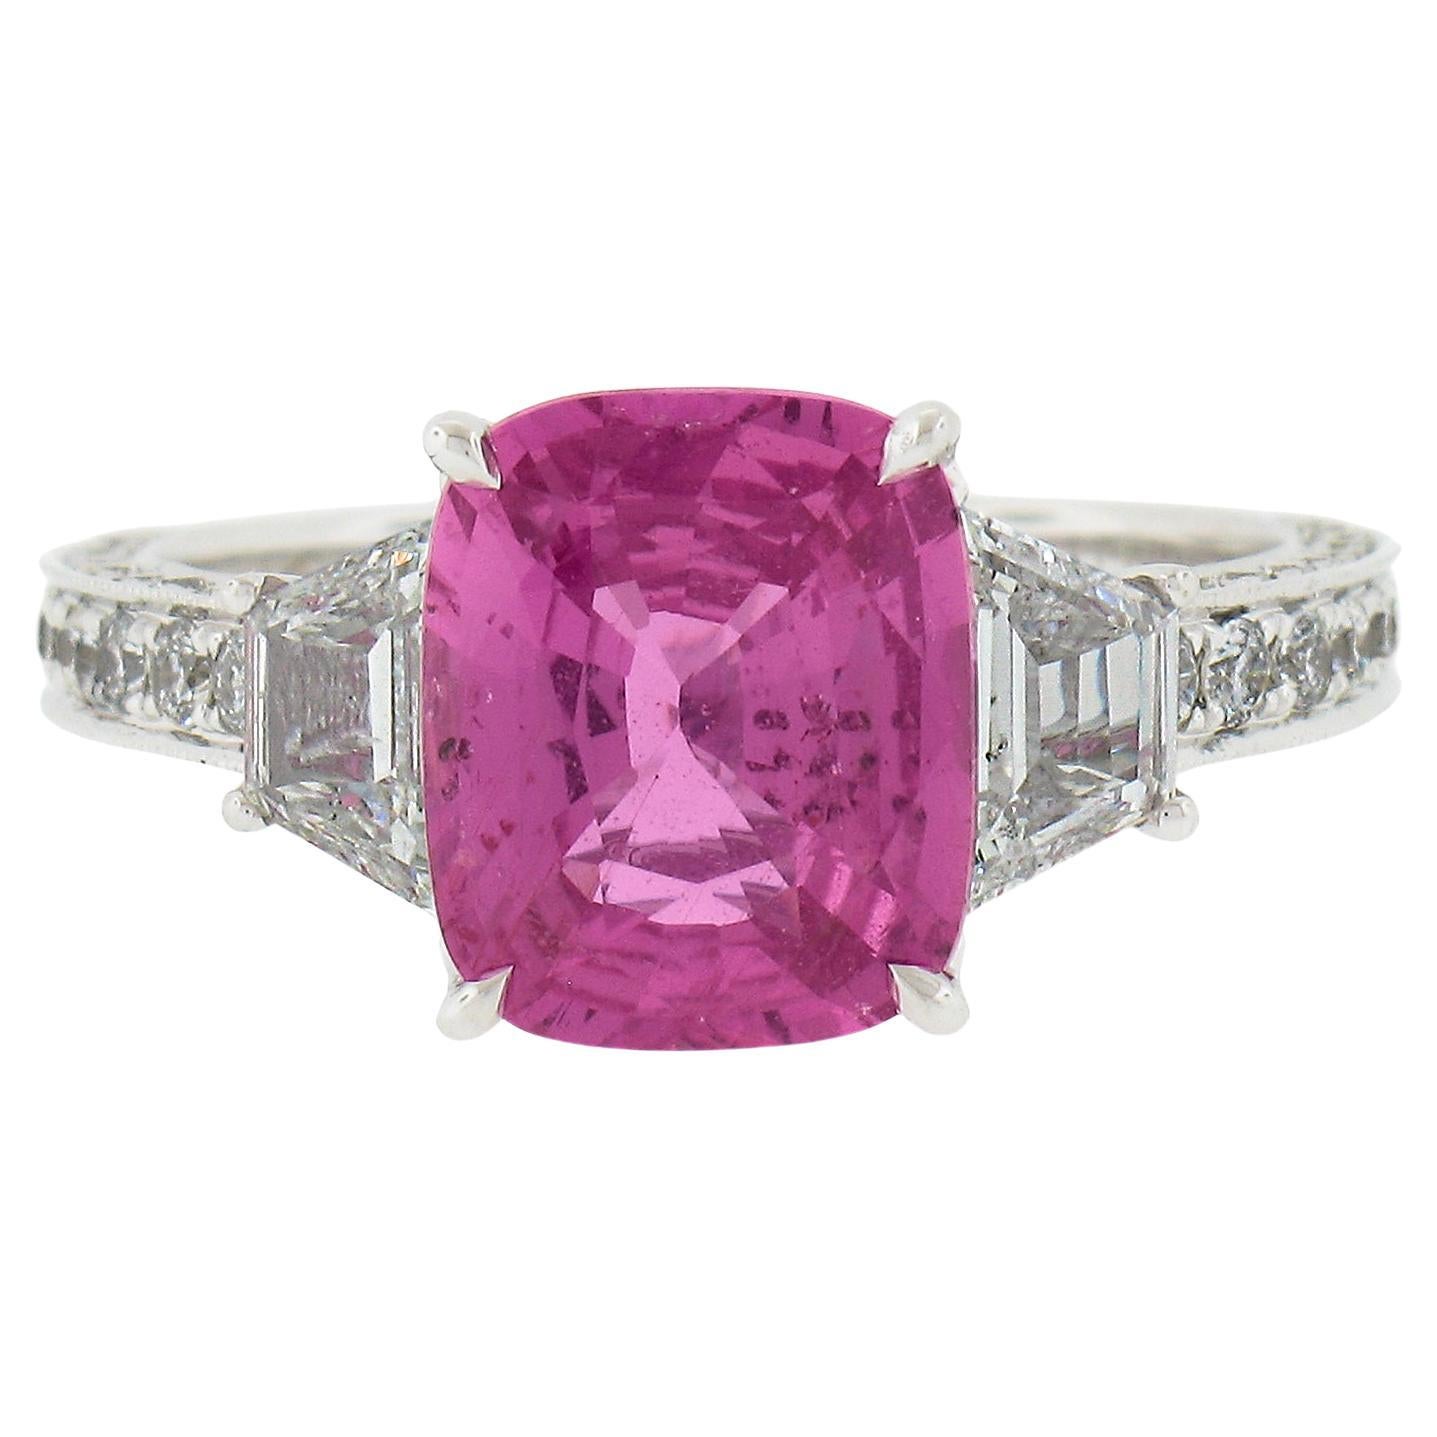 NEW 18K Gold 4.53ctw GIA Cushion Cut Pink Sapphire & Diamond Engagement Ring